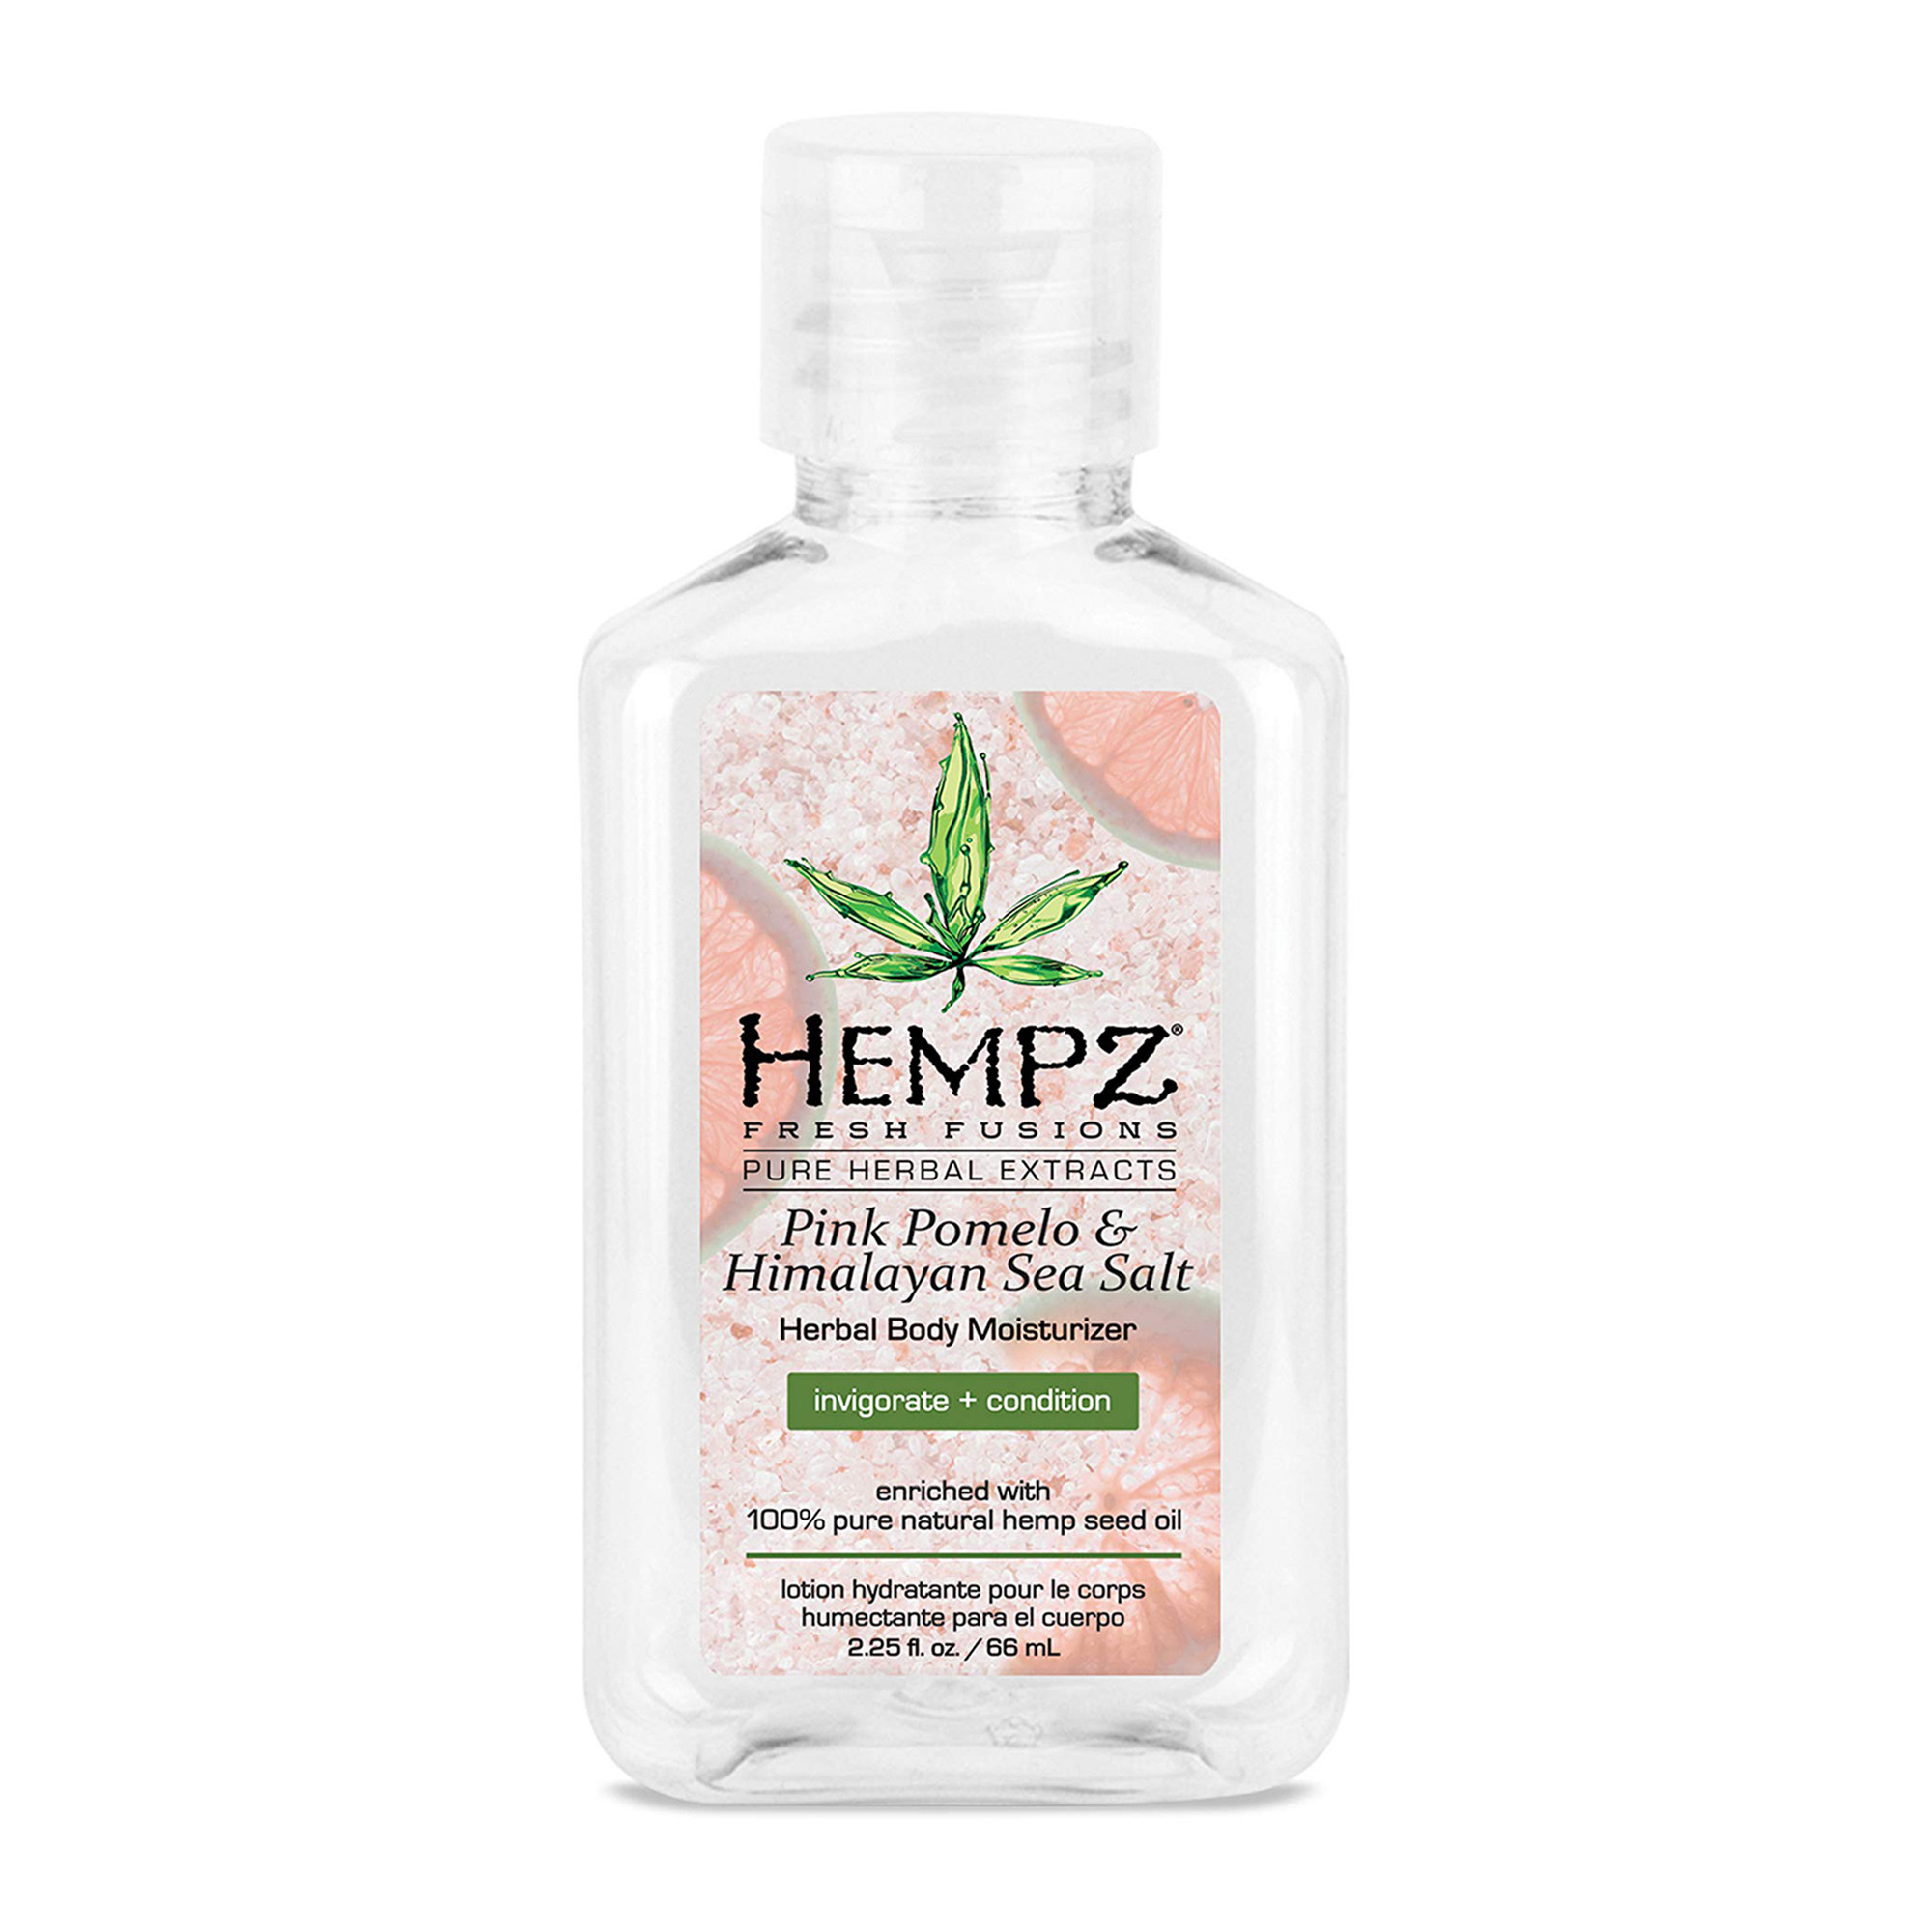 Відгуки про Hempz Fresh Fusions Pink Pomelo And Himalayan Sea Salt Herbal Body Moisturizer - Молочко для тела Помело и Гималайская соль